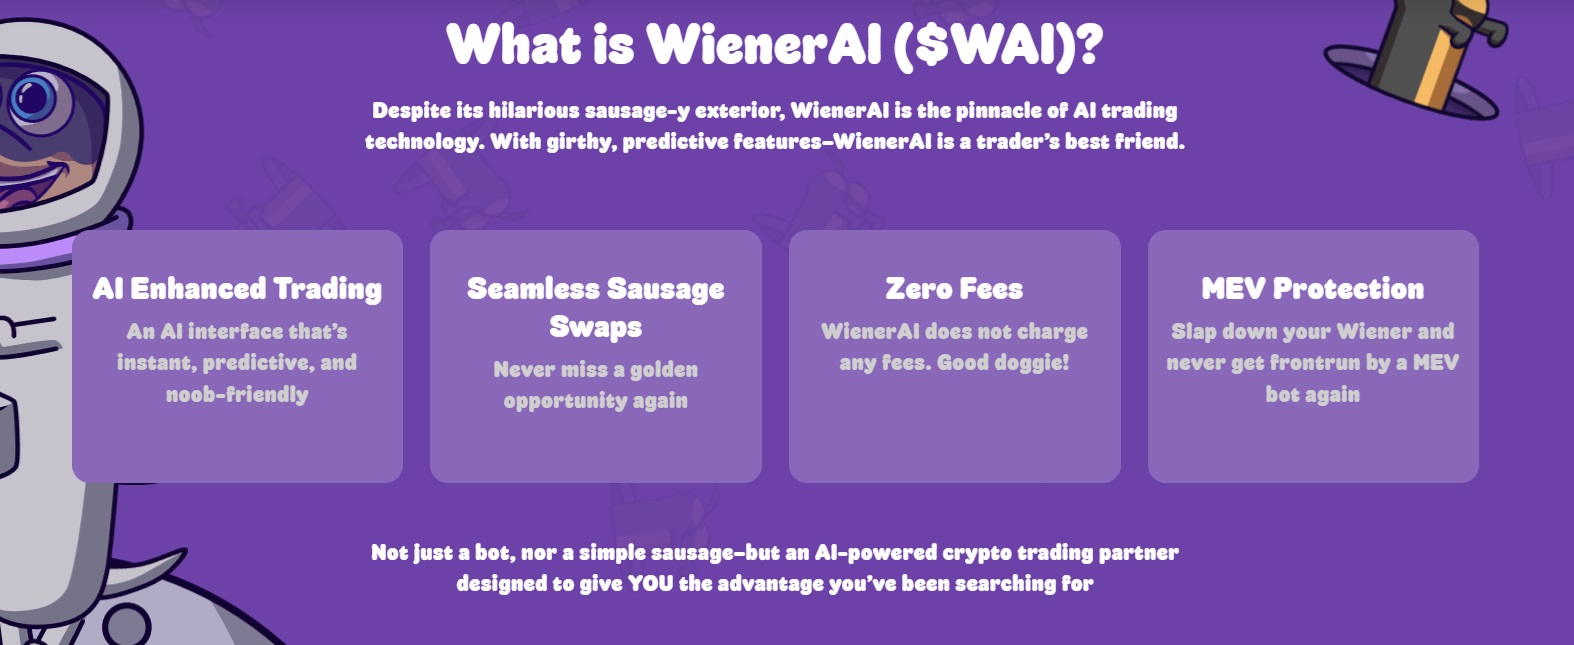 WienerAI Impressive Features